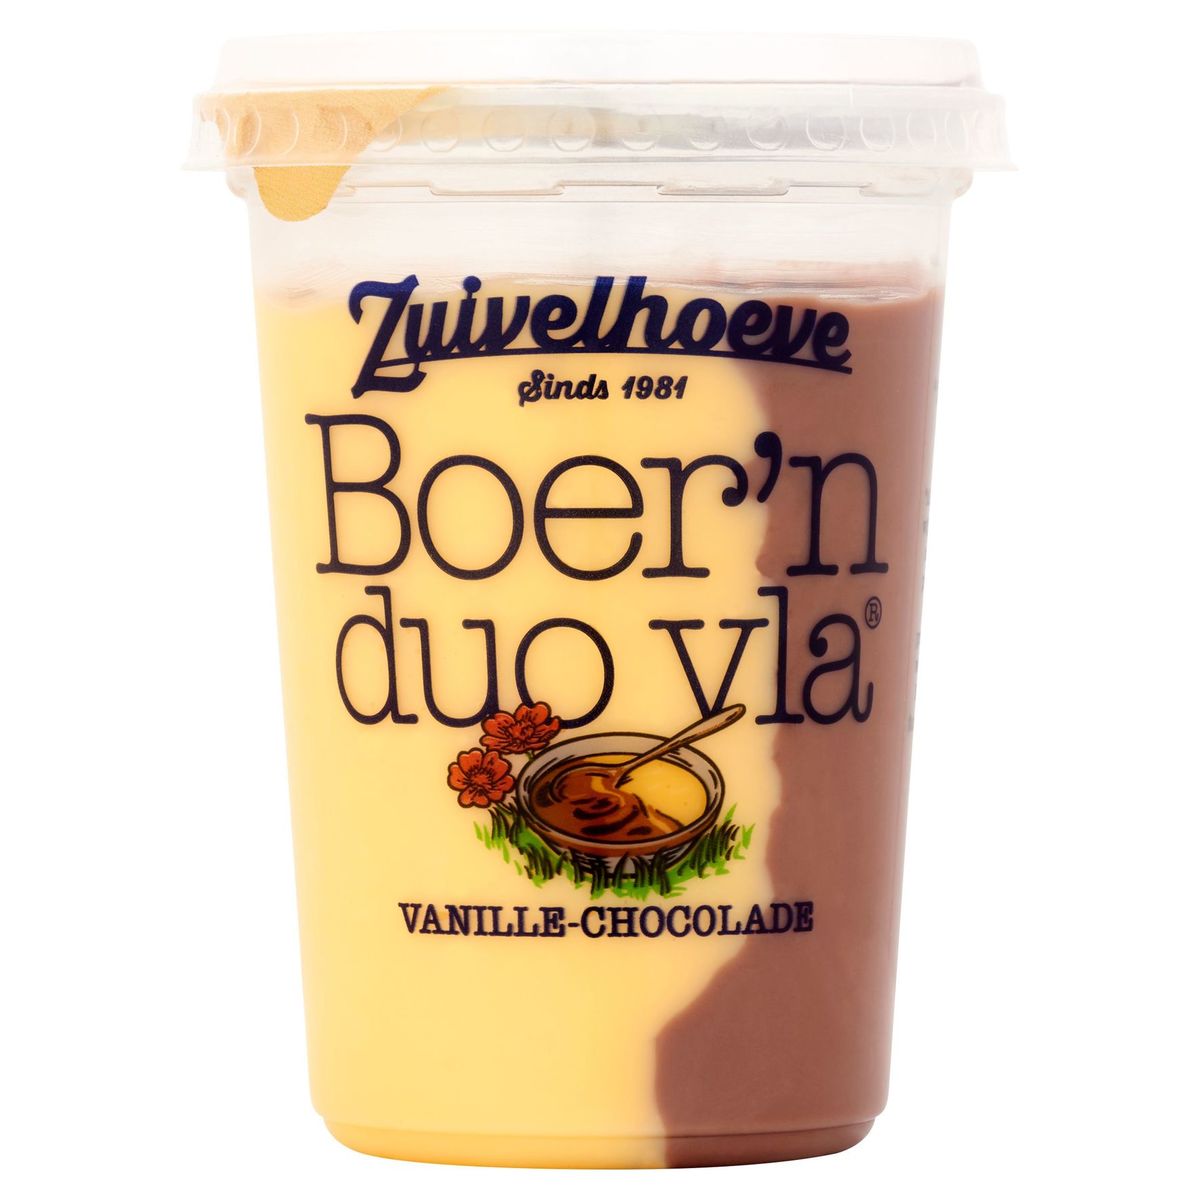 Zuivelhoeve Boer'n Duo Vla Vanille-Chocolade 450 g